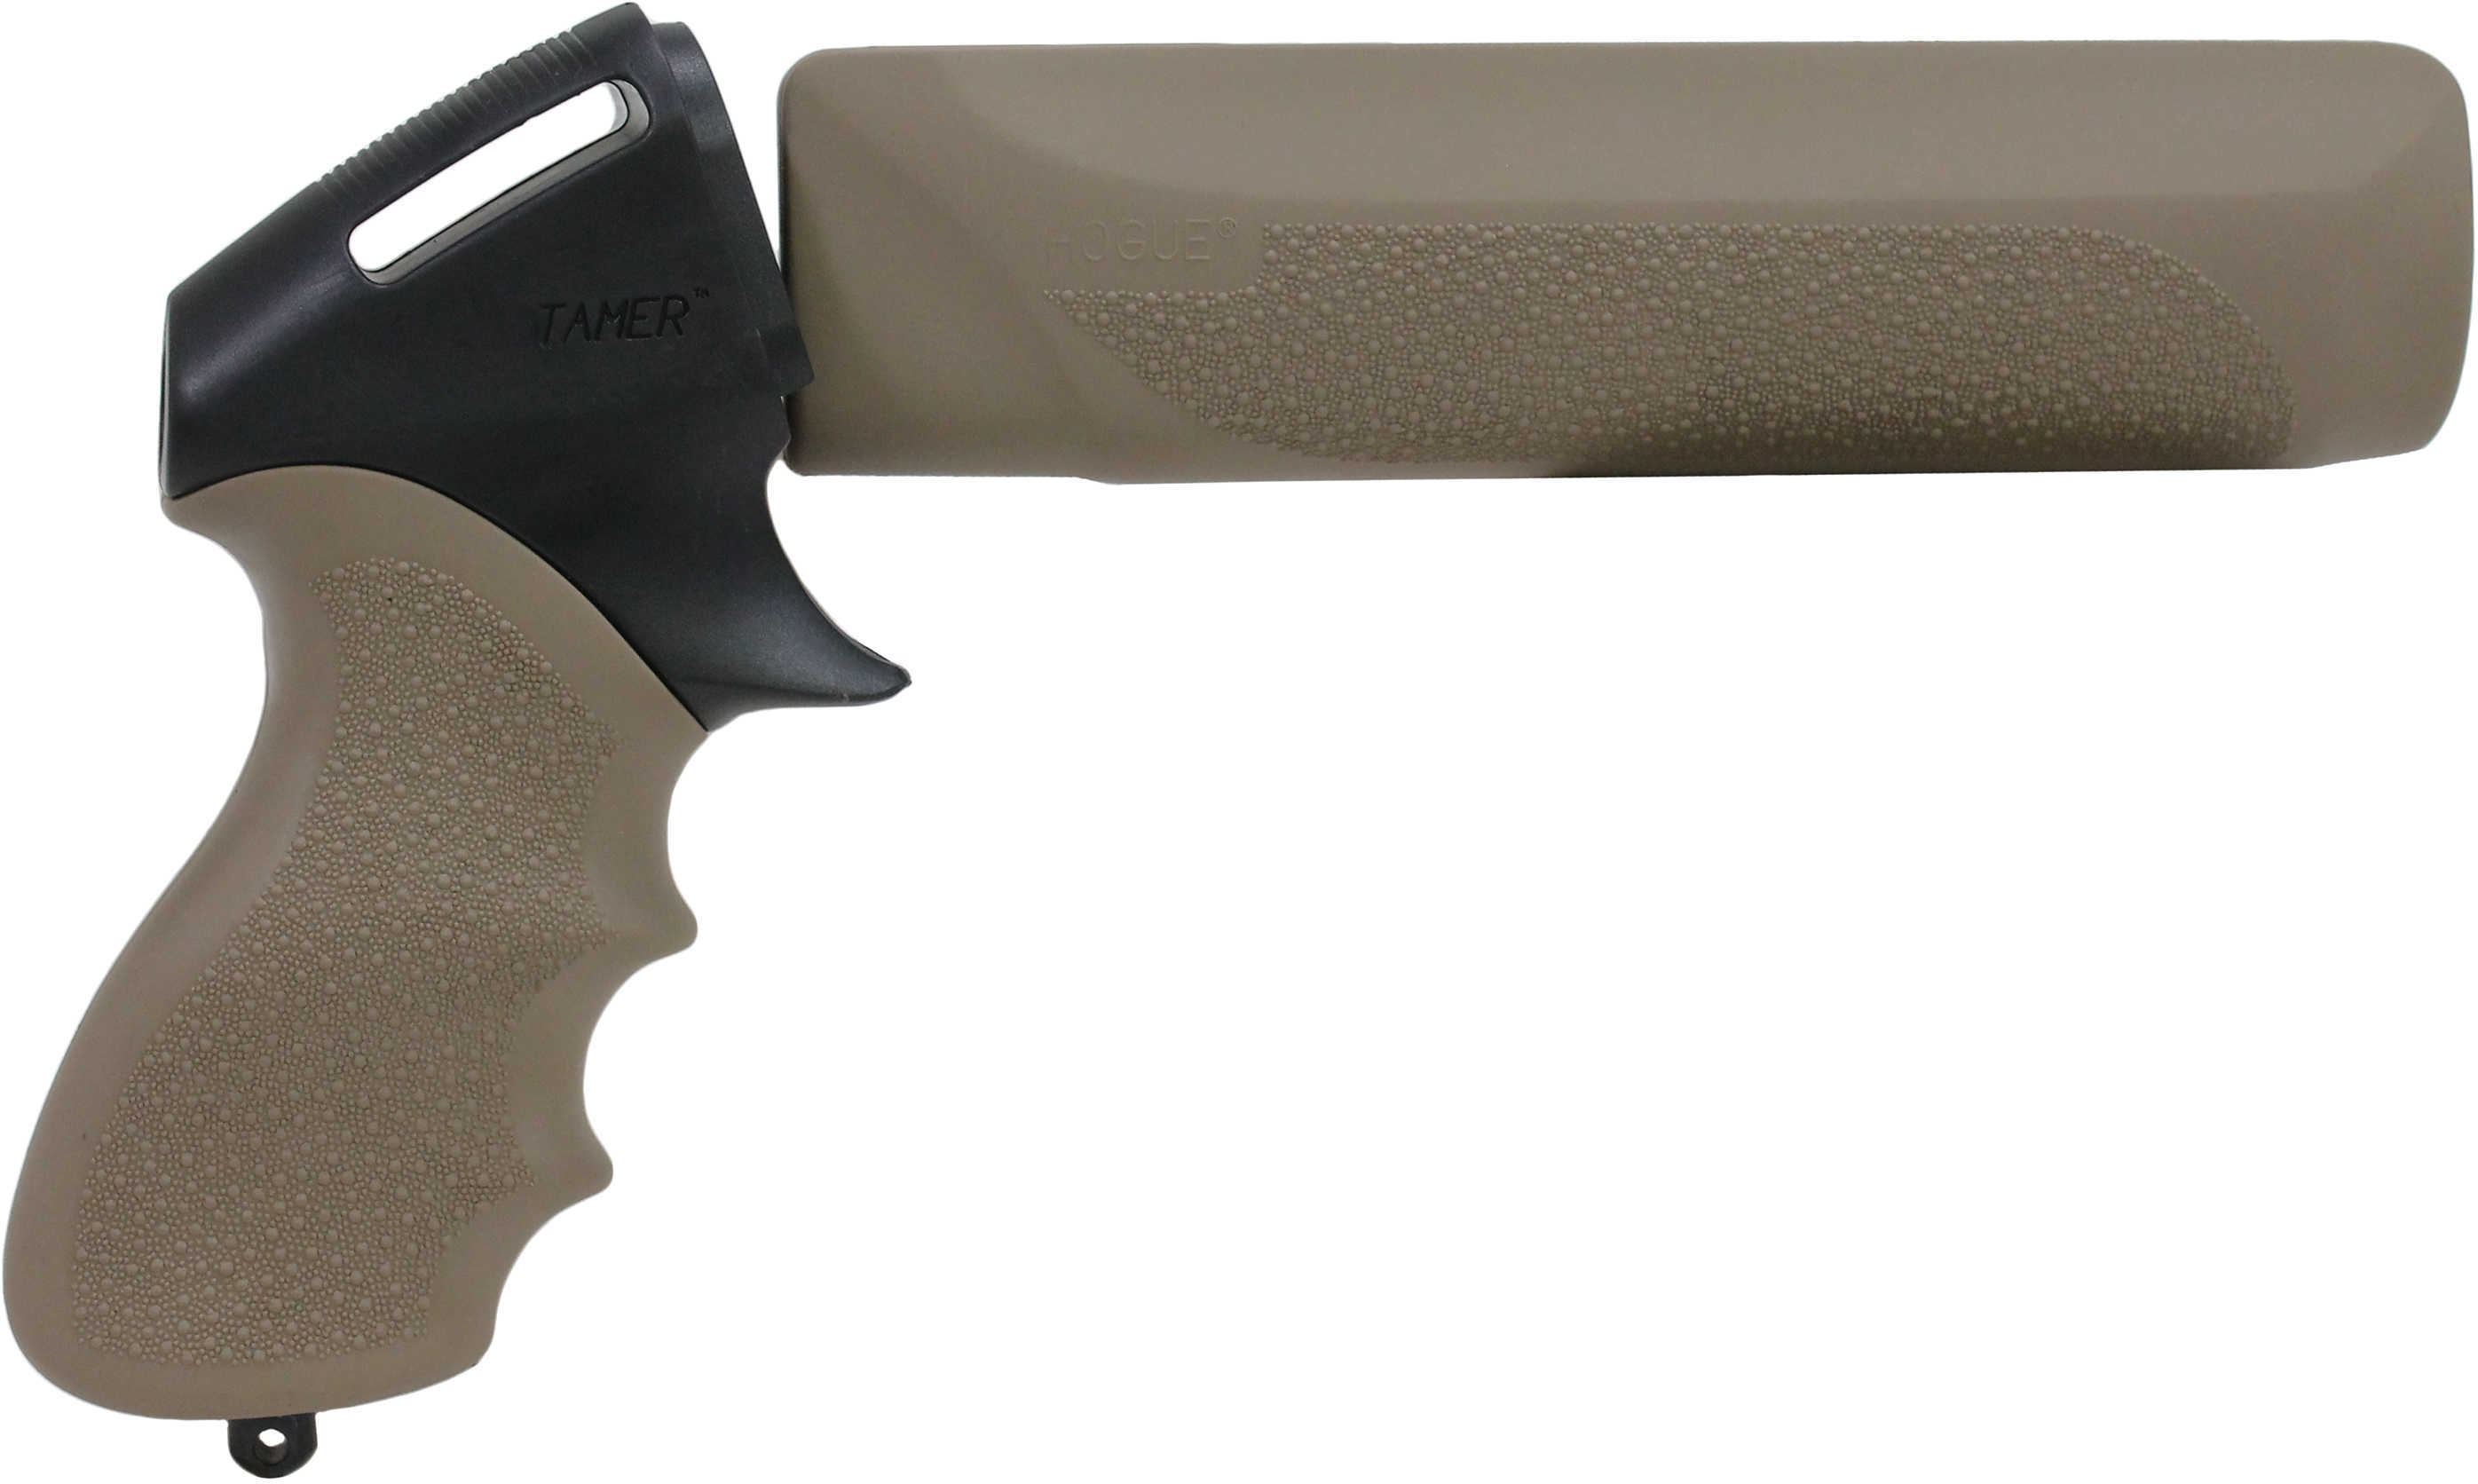 Hogue Remington 870 12 Gauge Tamer Shotgun Pistol Grip and Forend Flat Dark Earth Md: 08315